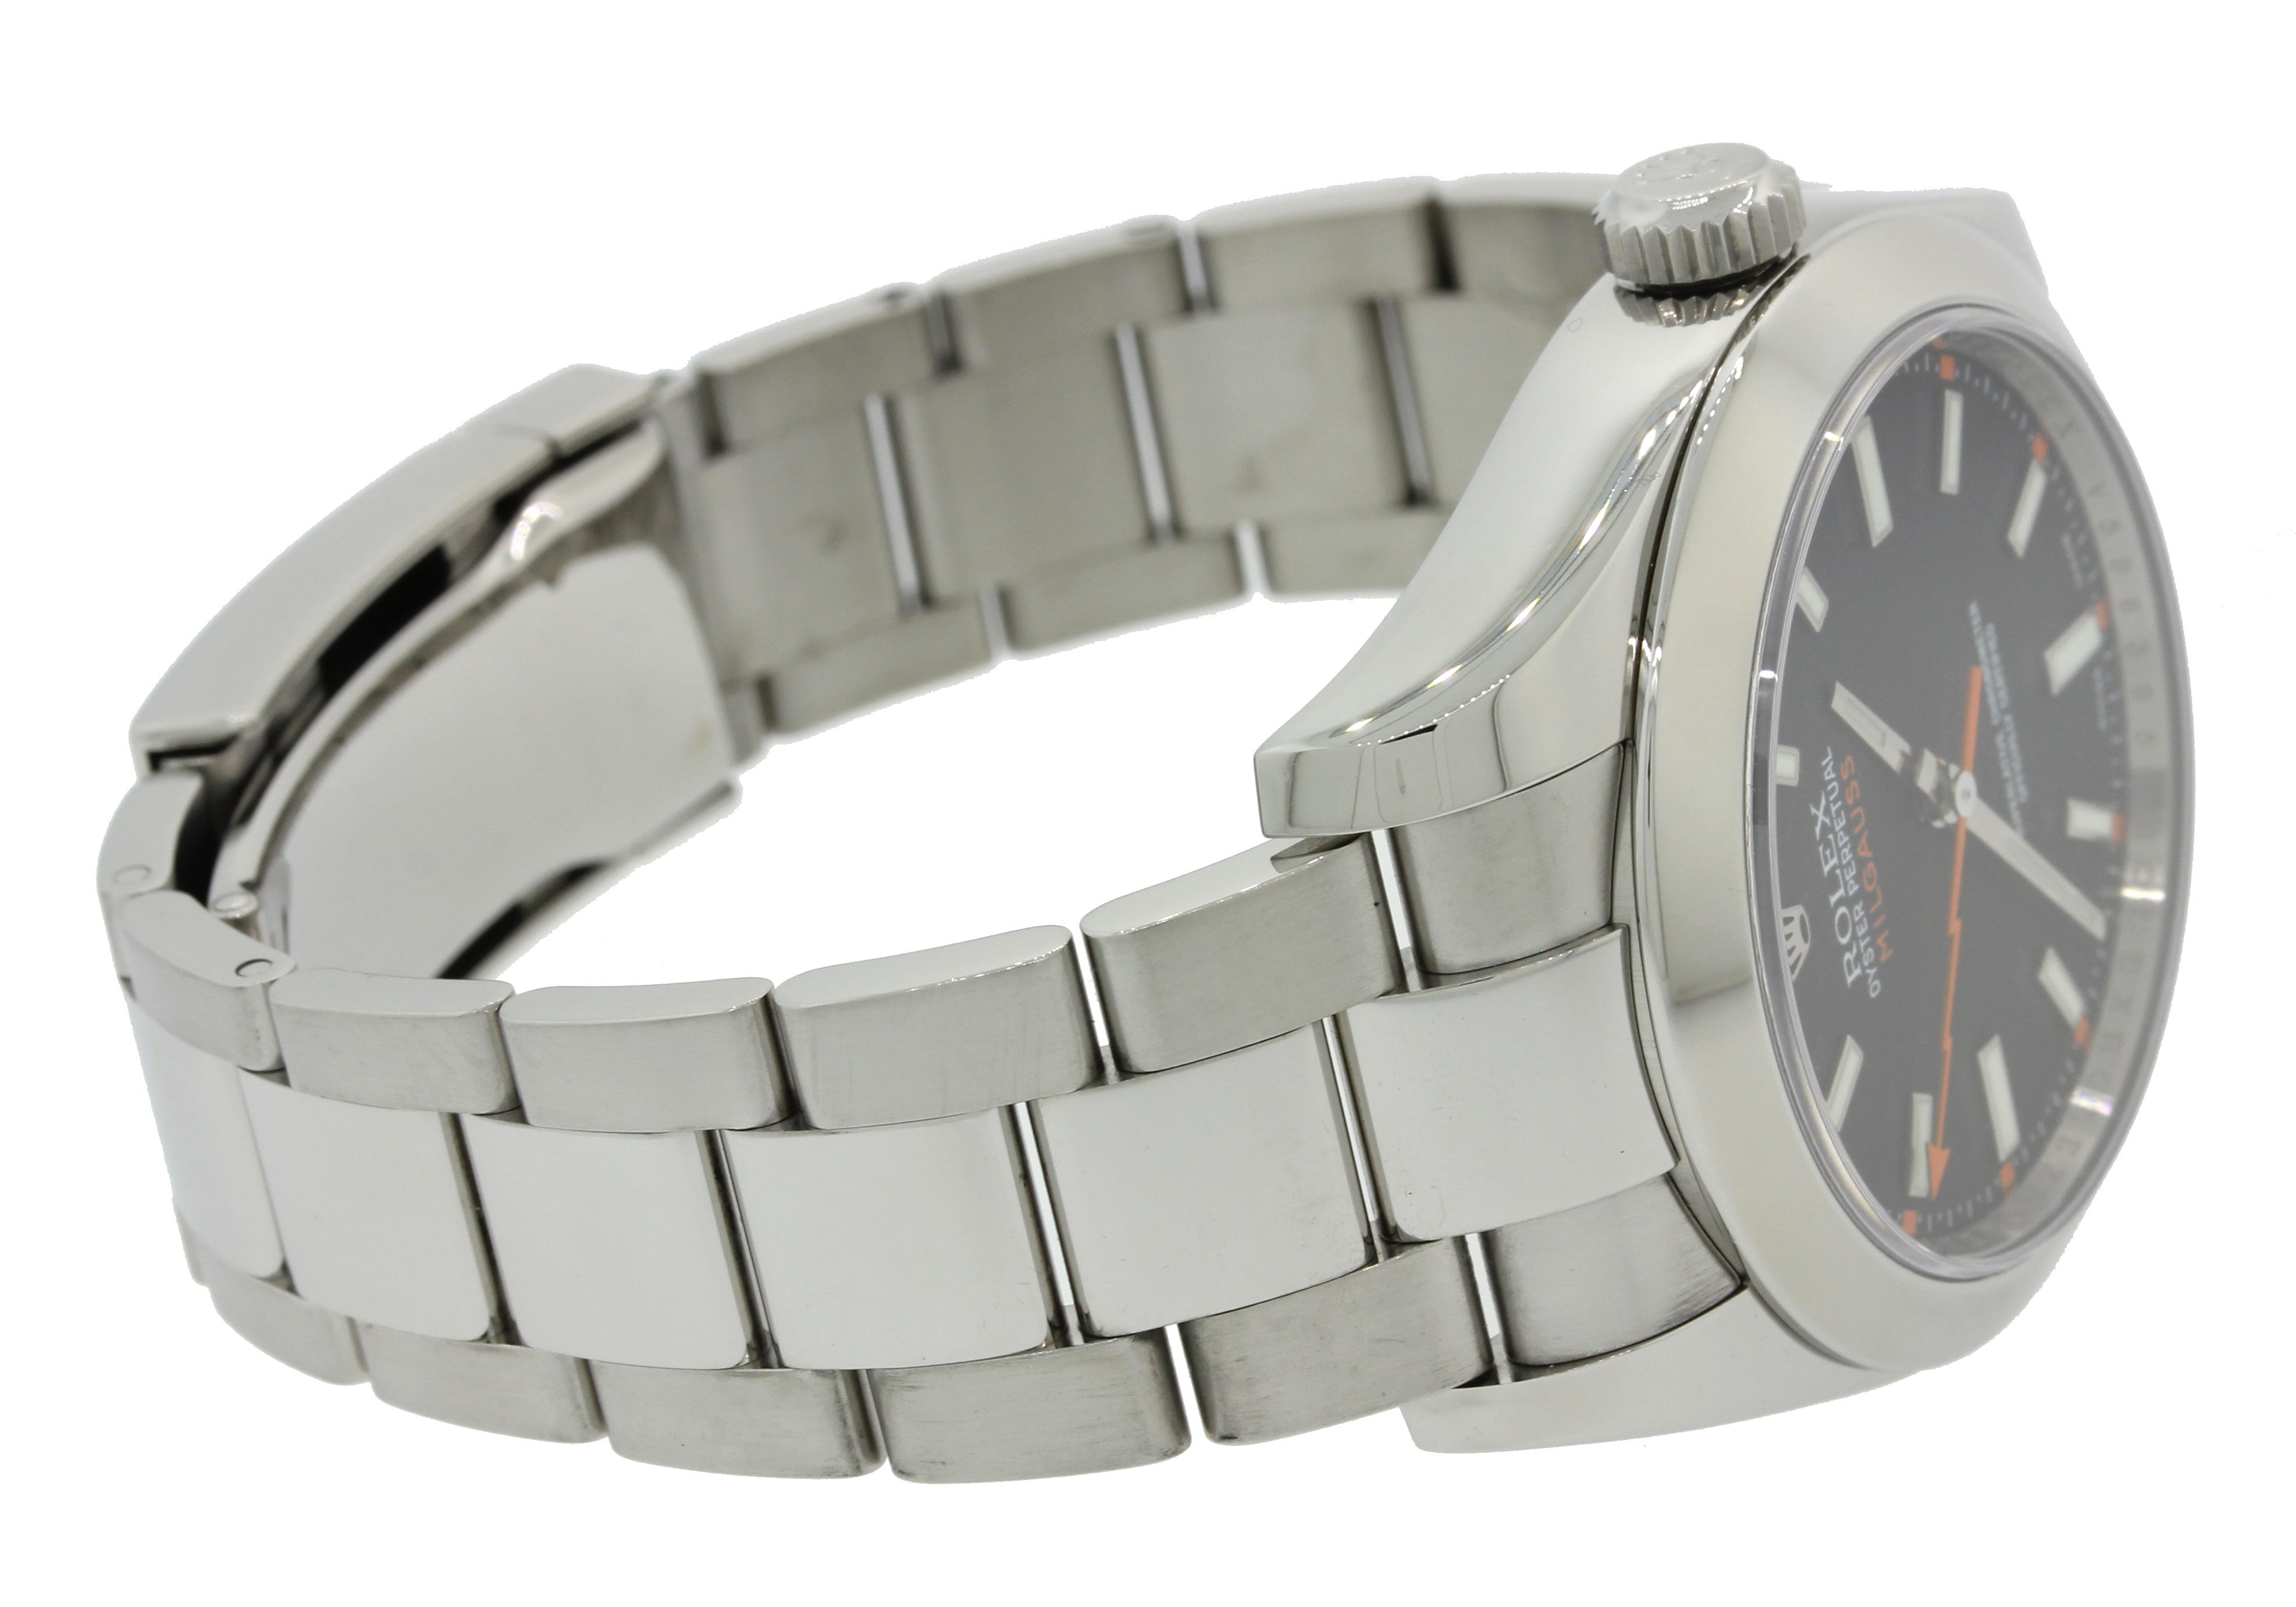 MINT Rolex Milgauss Black Orange 116400 V Steel Engraved Antimagnetic Watch B&P